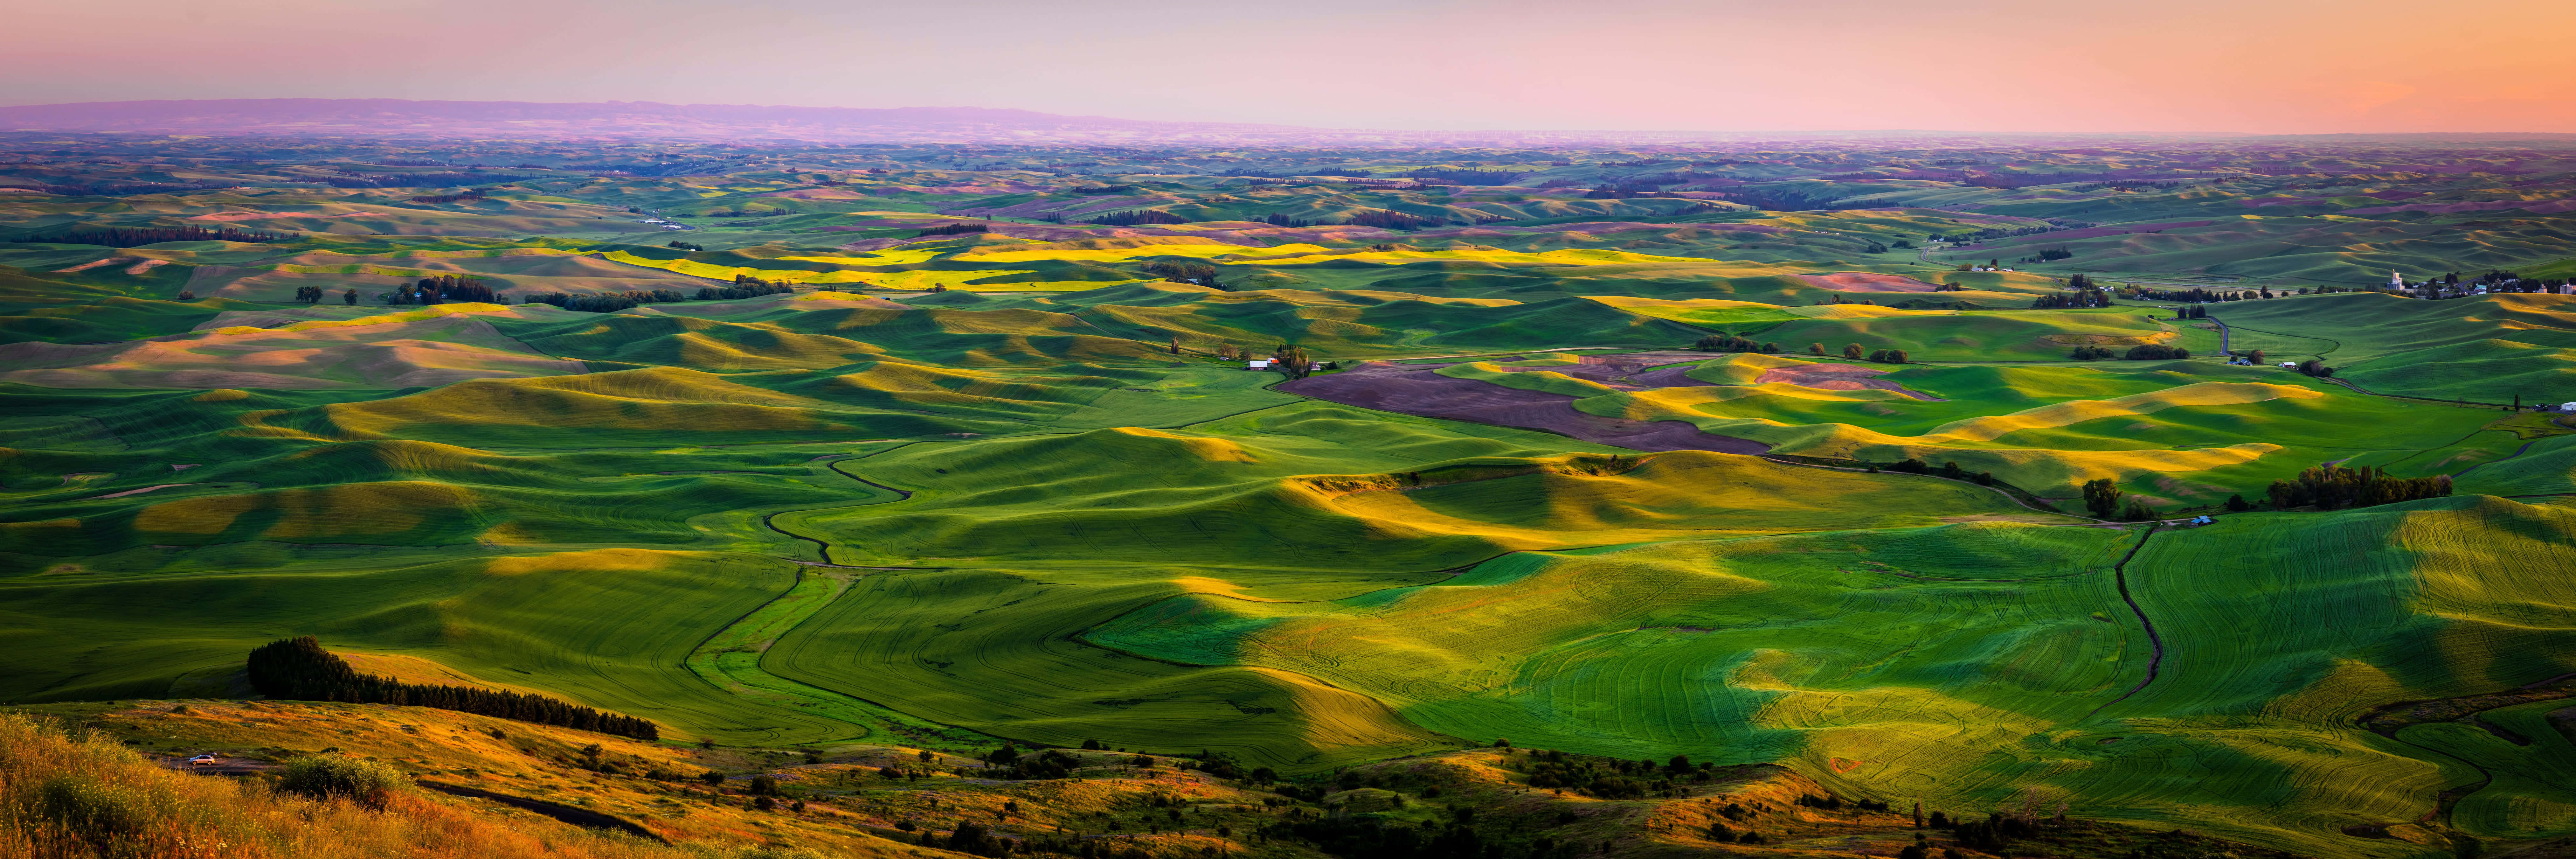 Green Hills And Valleys As A Panoramic Desktop